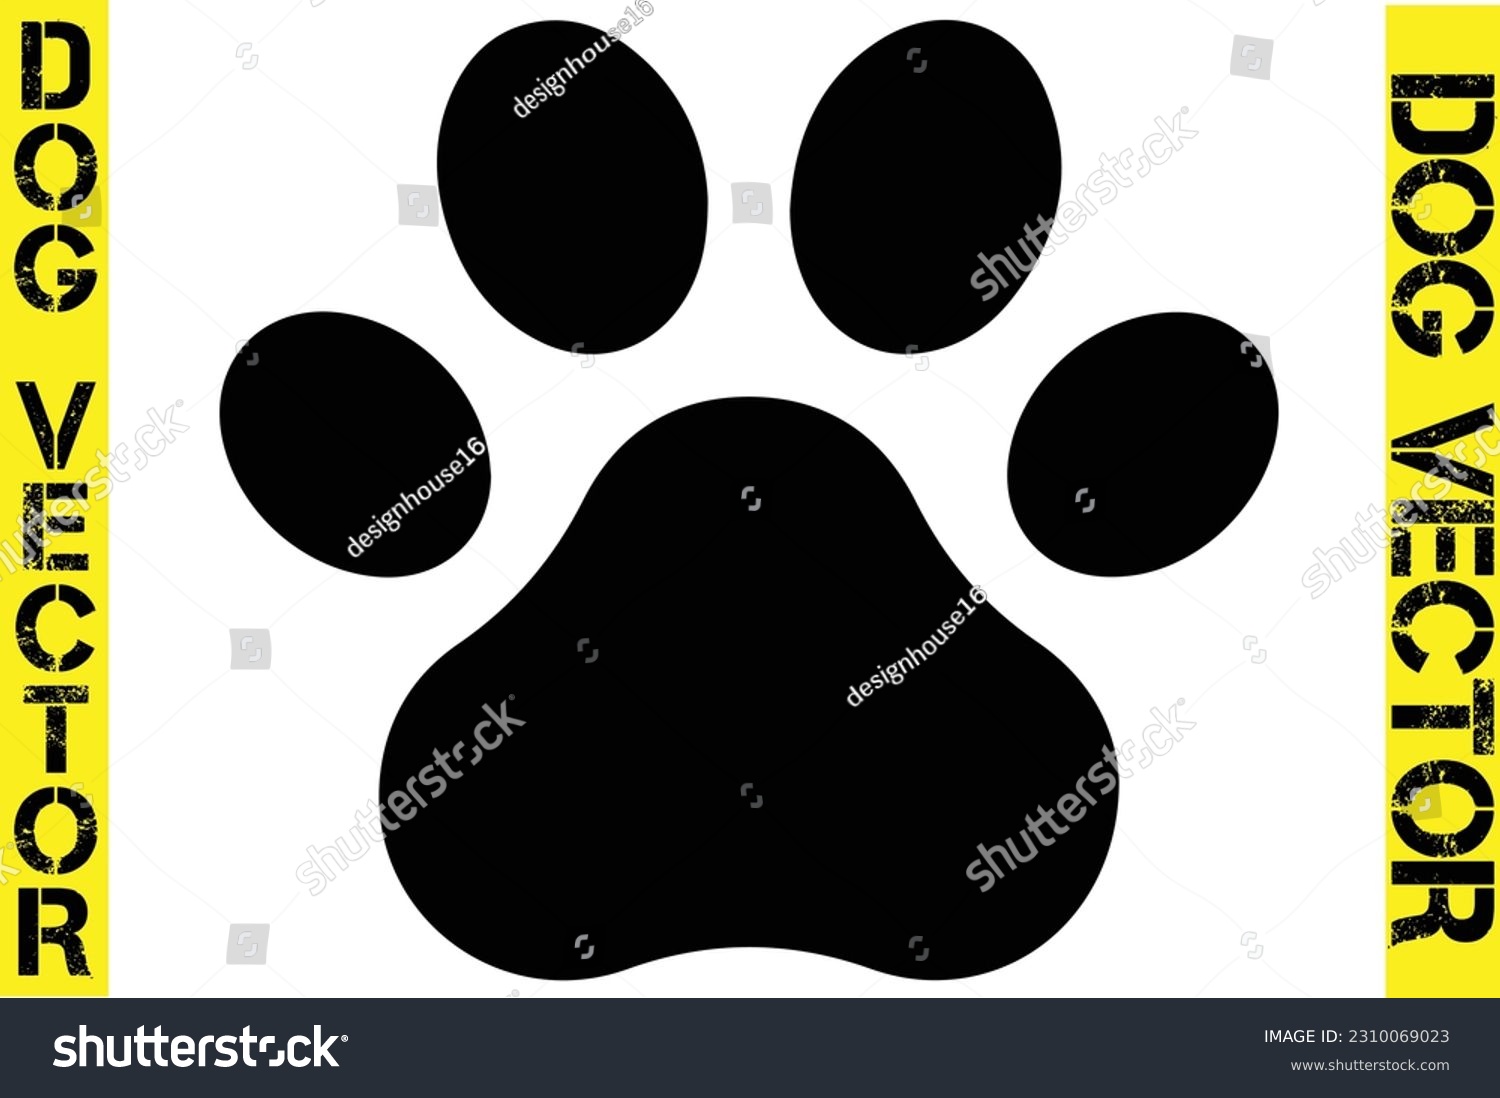 SVG of Dog breeds vector image,
Dog silhouettes vector image,
Animal running silhouettes image,
Animal silhouettes vector,
Dog pet animal silhouette vector image,
Dog paw prints icons set svg